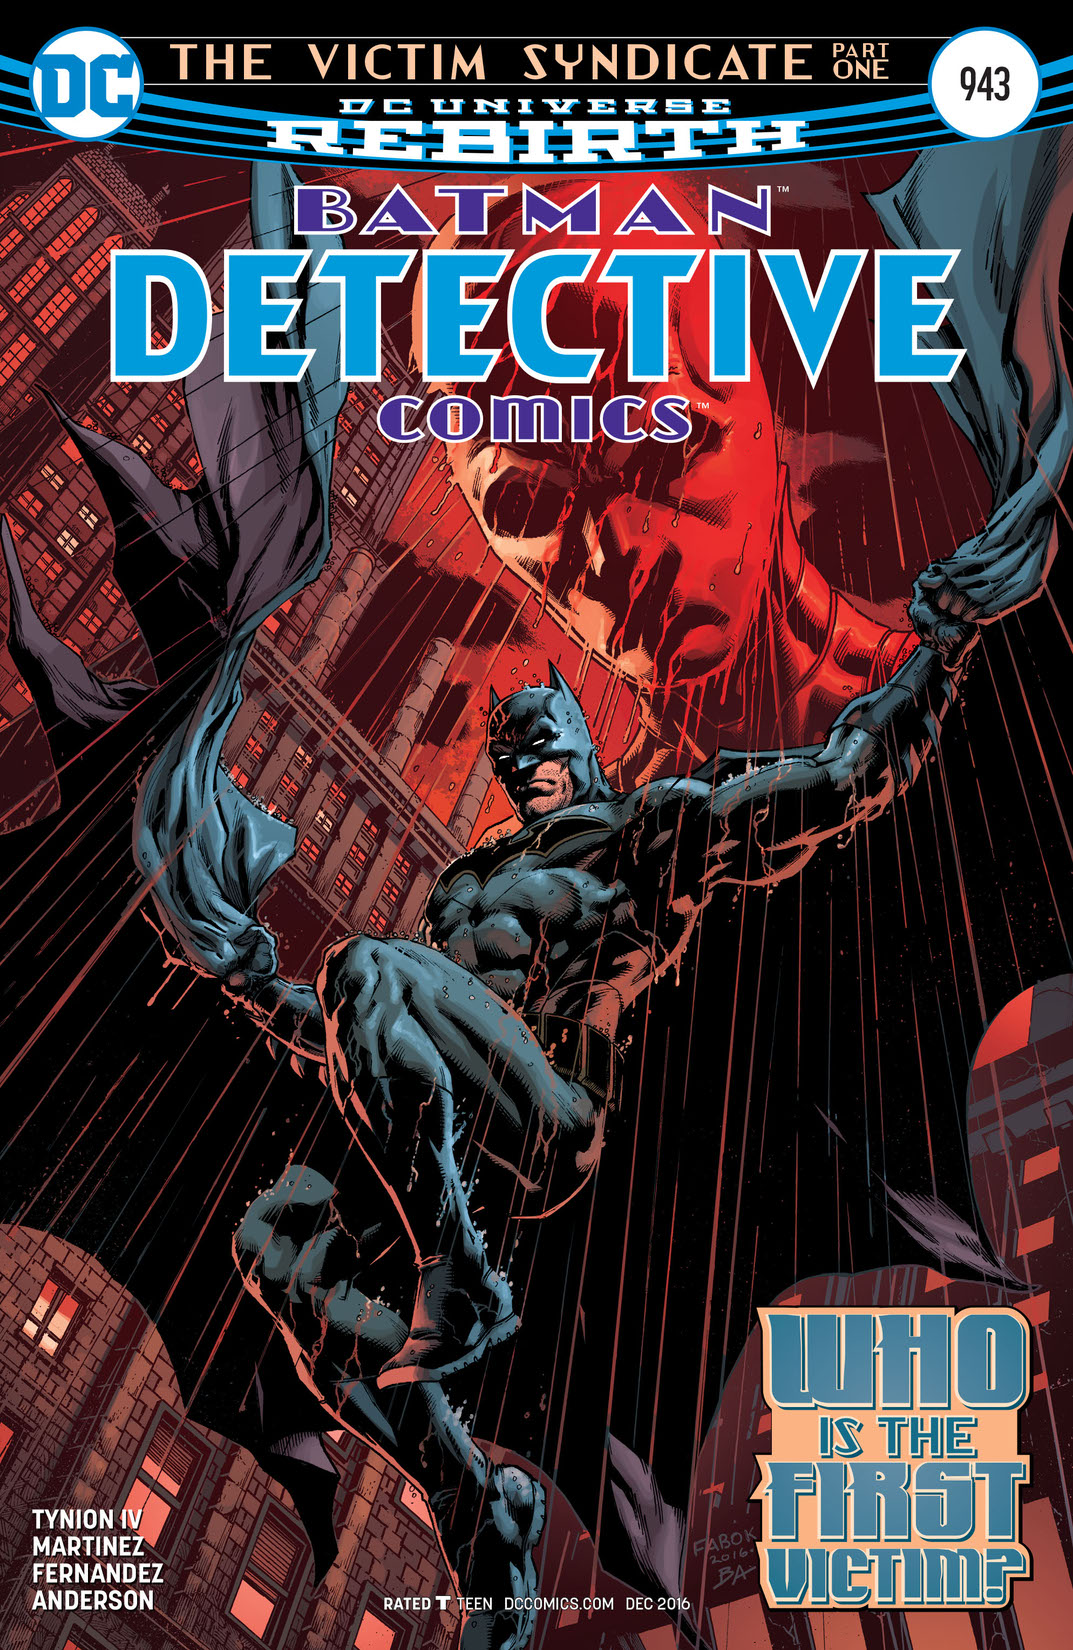 Detective Comics (2016-) #943 preview images